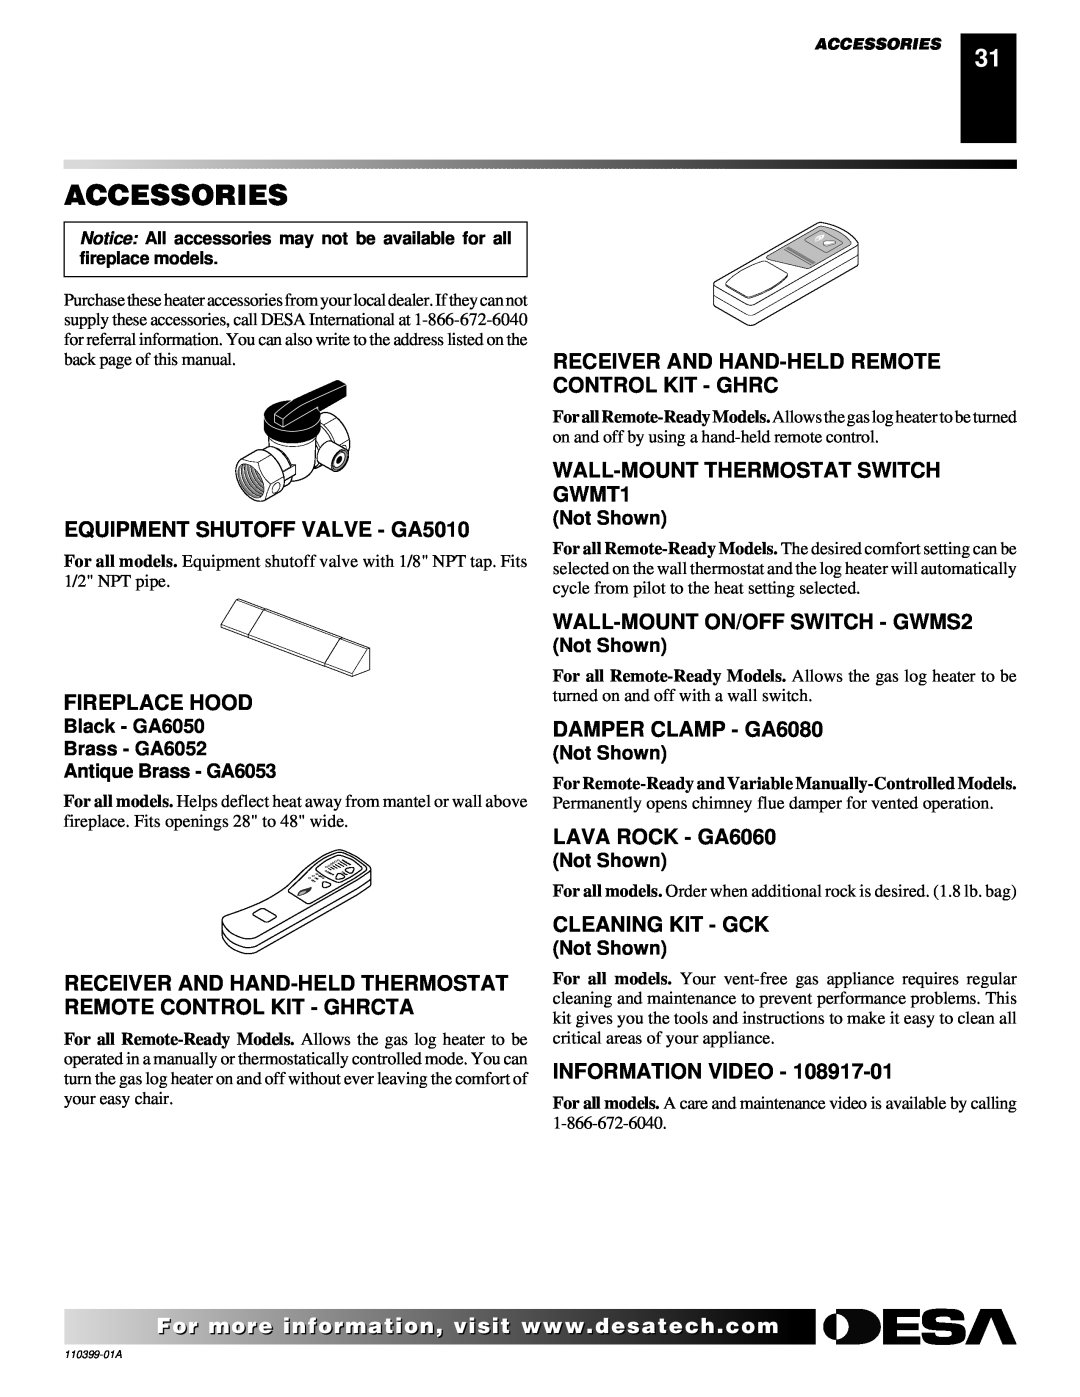 Desa FLAME-MAX Vintage Accessories, EQUIPMENT SHUTOFF VALVE - GA5010, Receiver And Hand-Heldremote Control Kit - Ghrc 